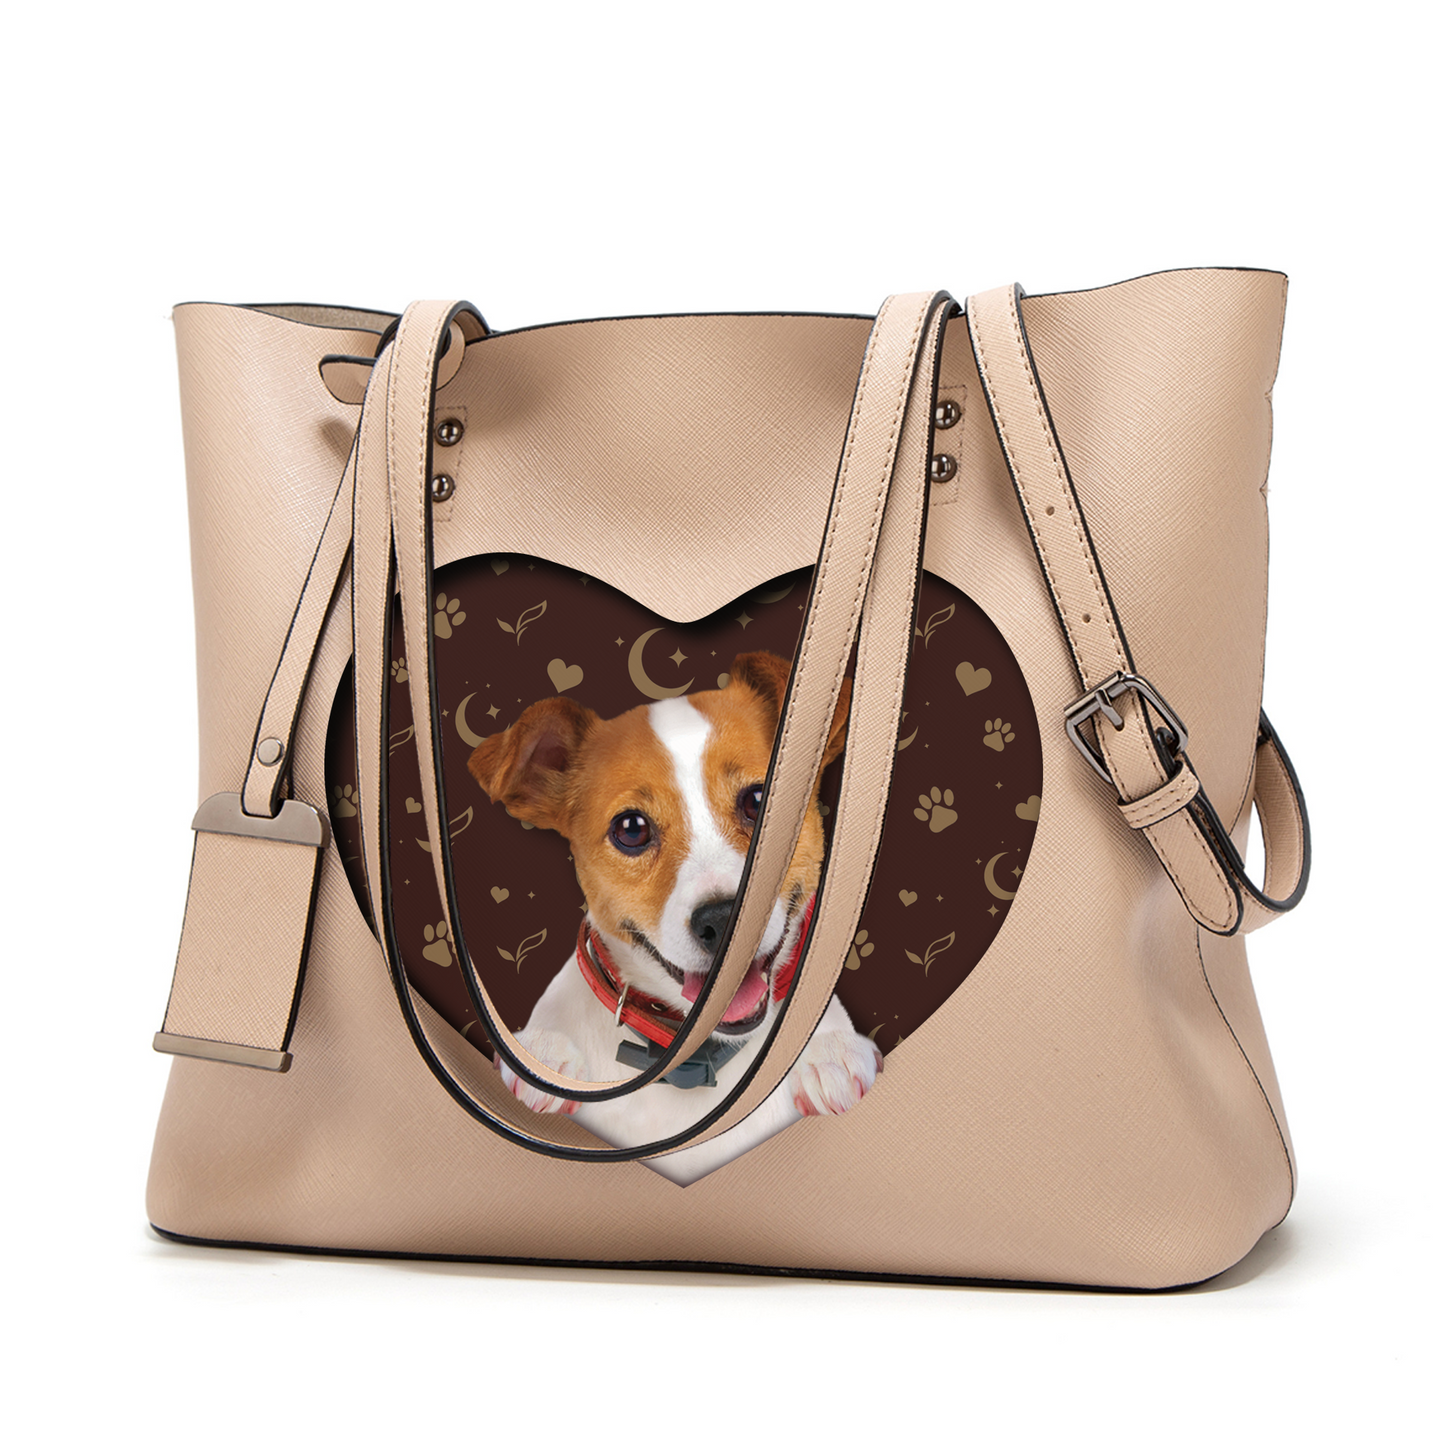 I Know I'm Cute - Jack Russell Terrier Glamour Handbag V1